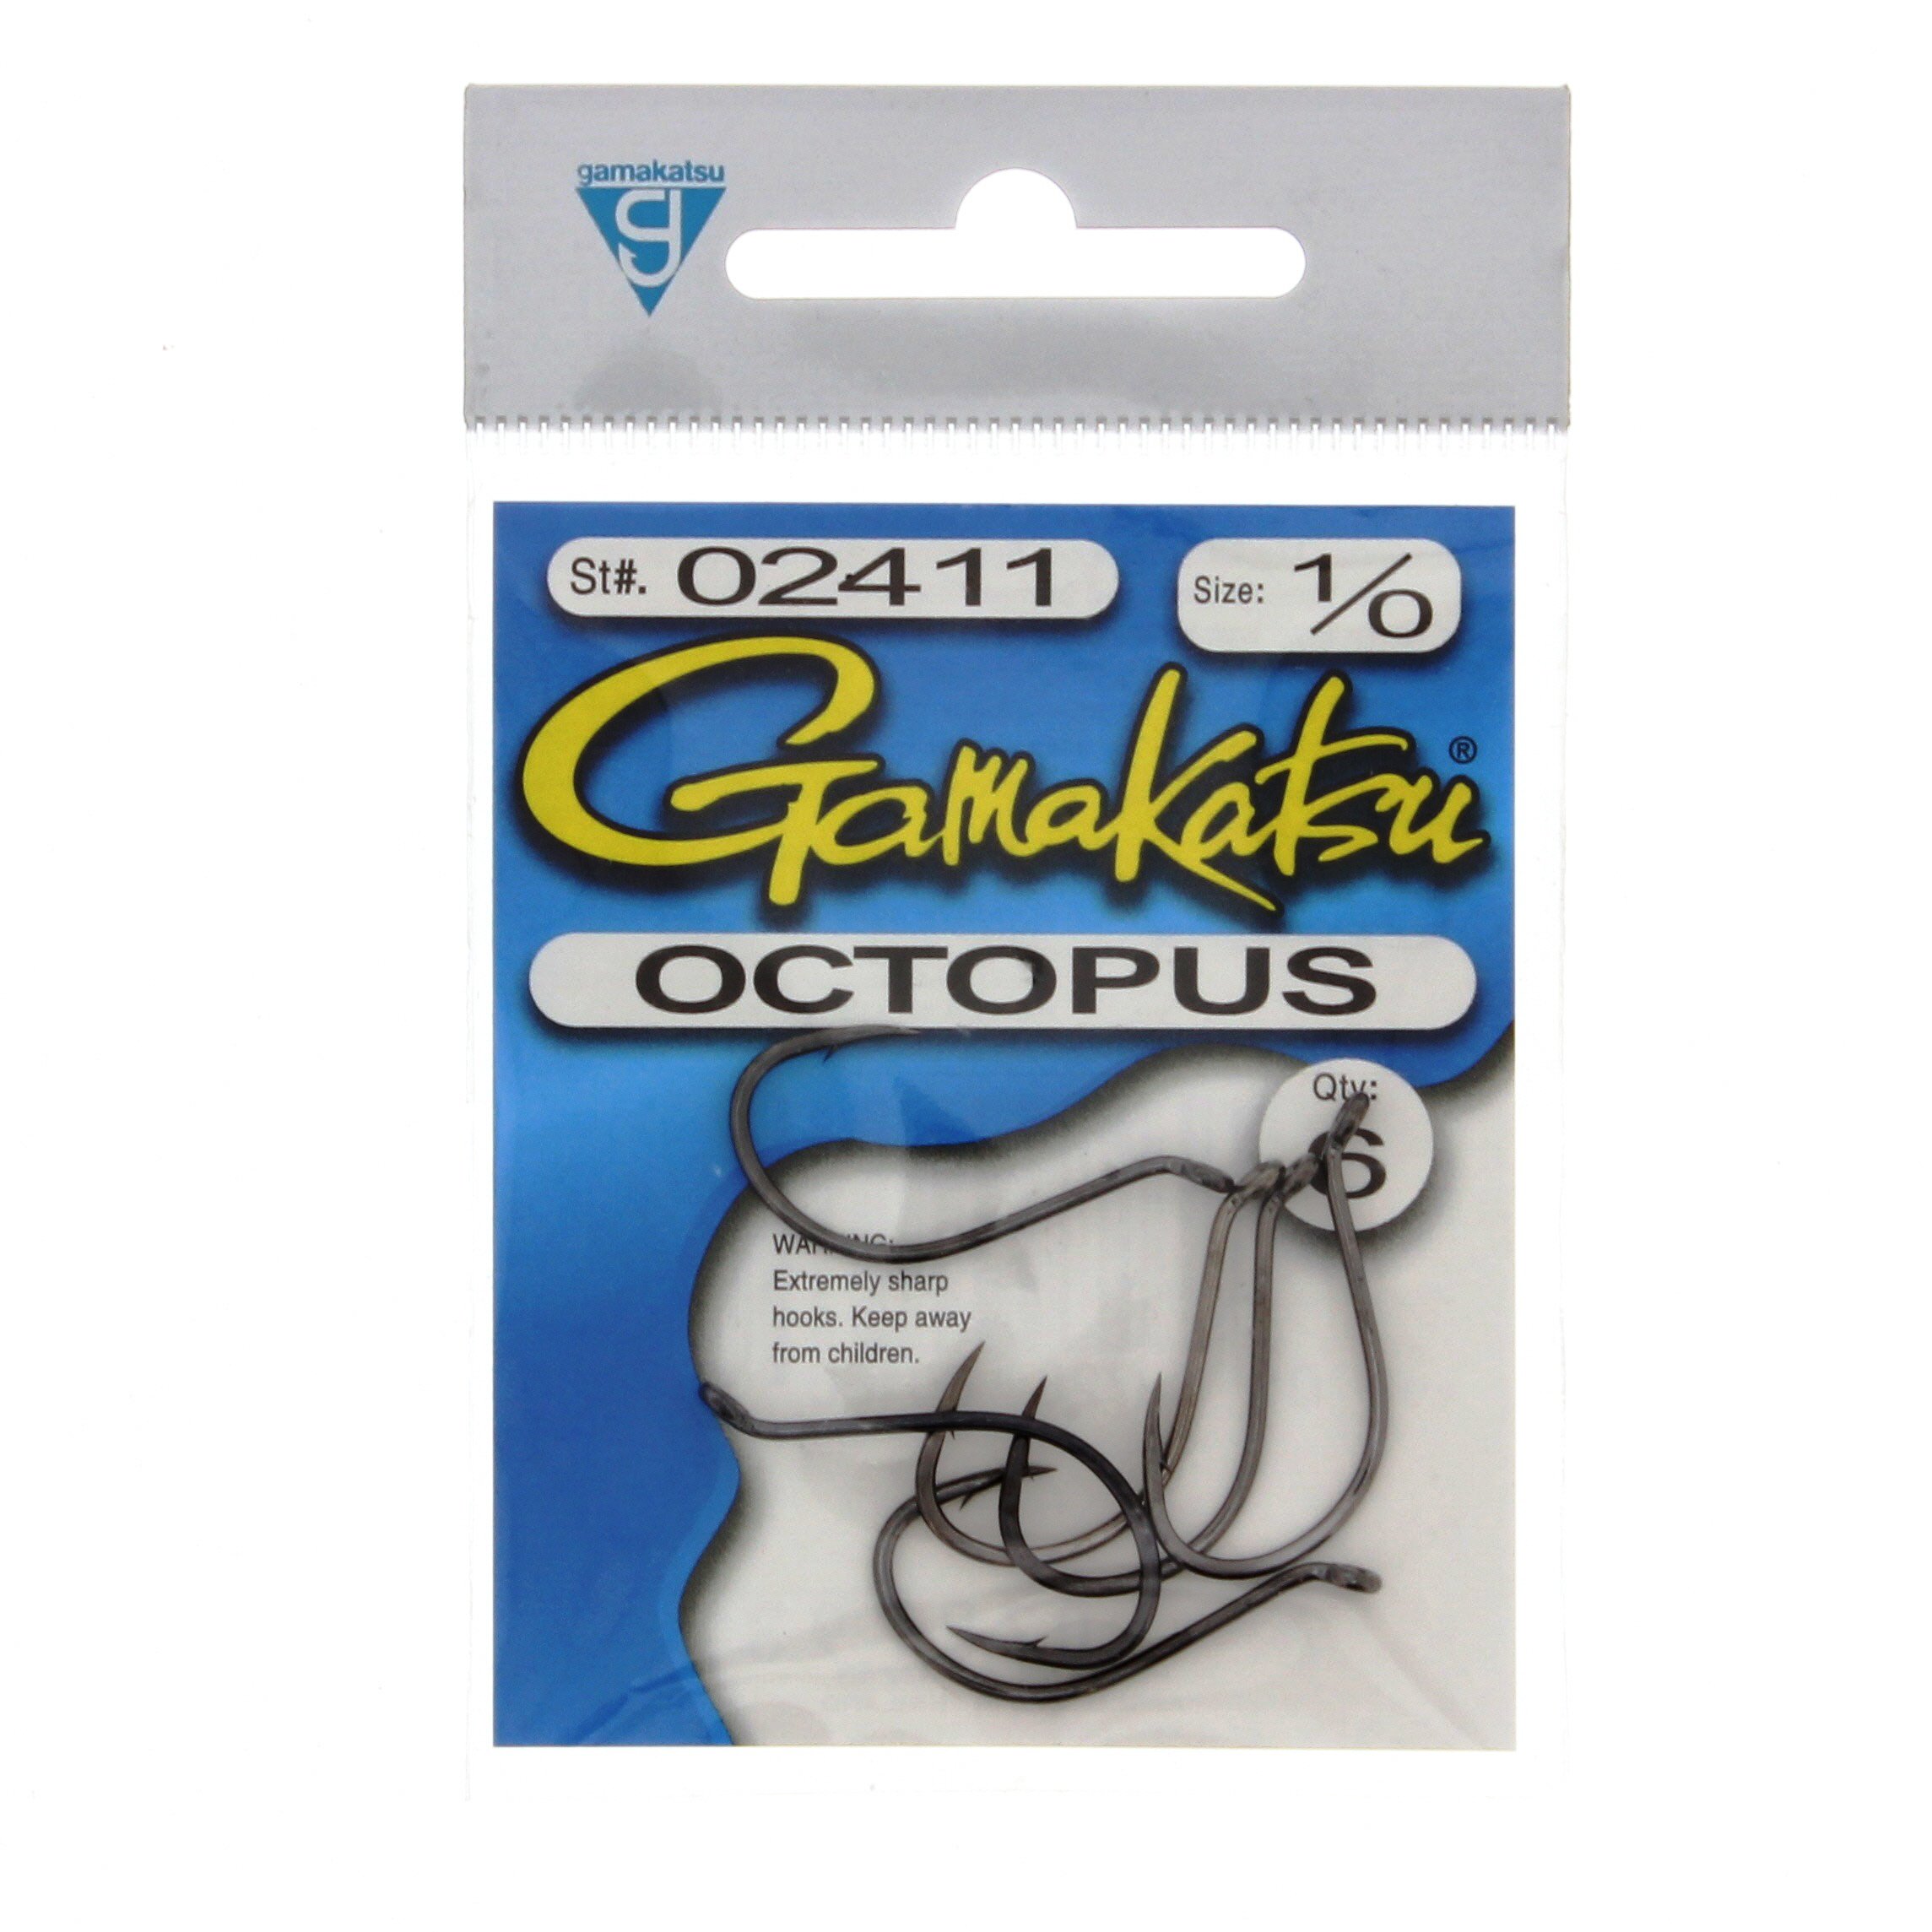 Gamakatsu NS Black Octopus Hook, Size 1/0 - Shop Fishing at H-E-B